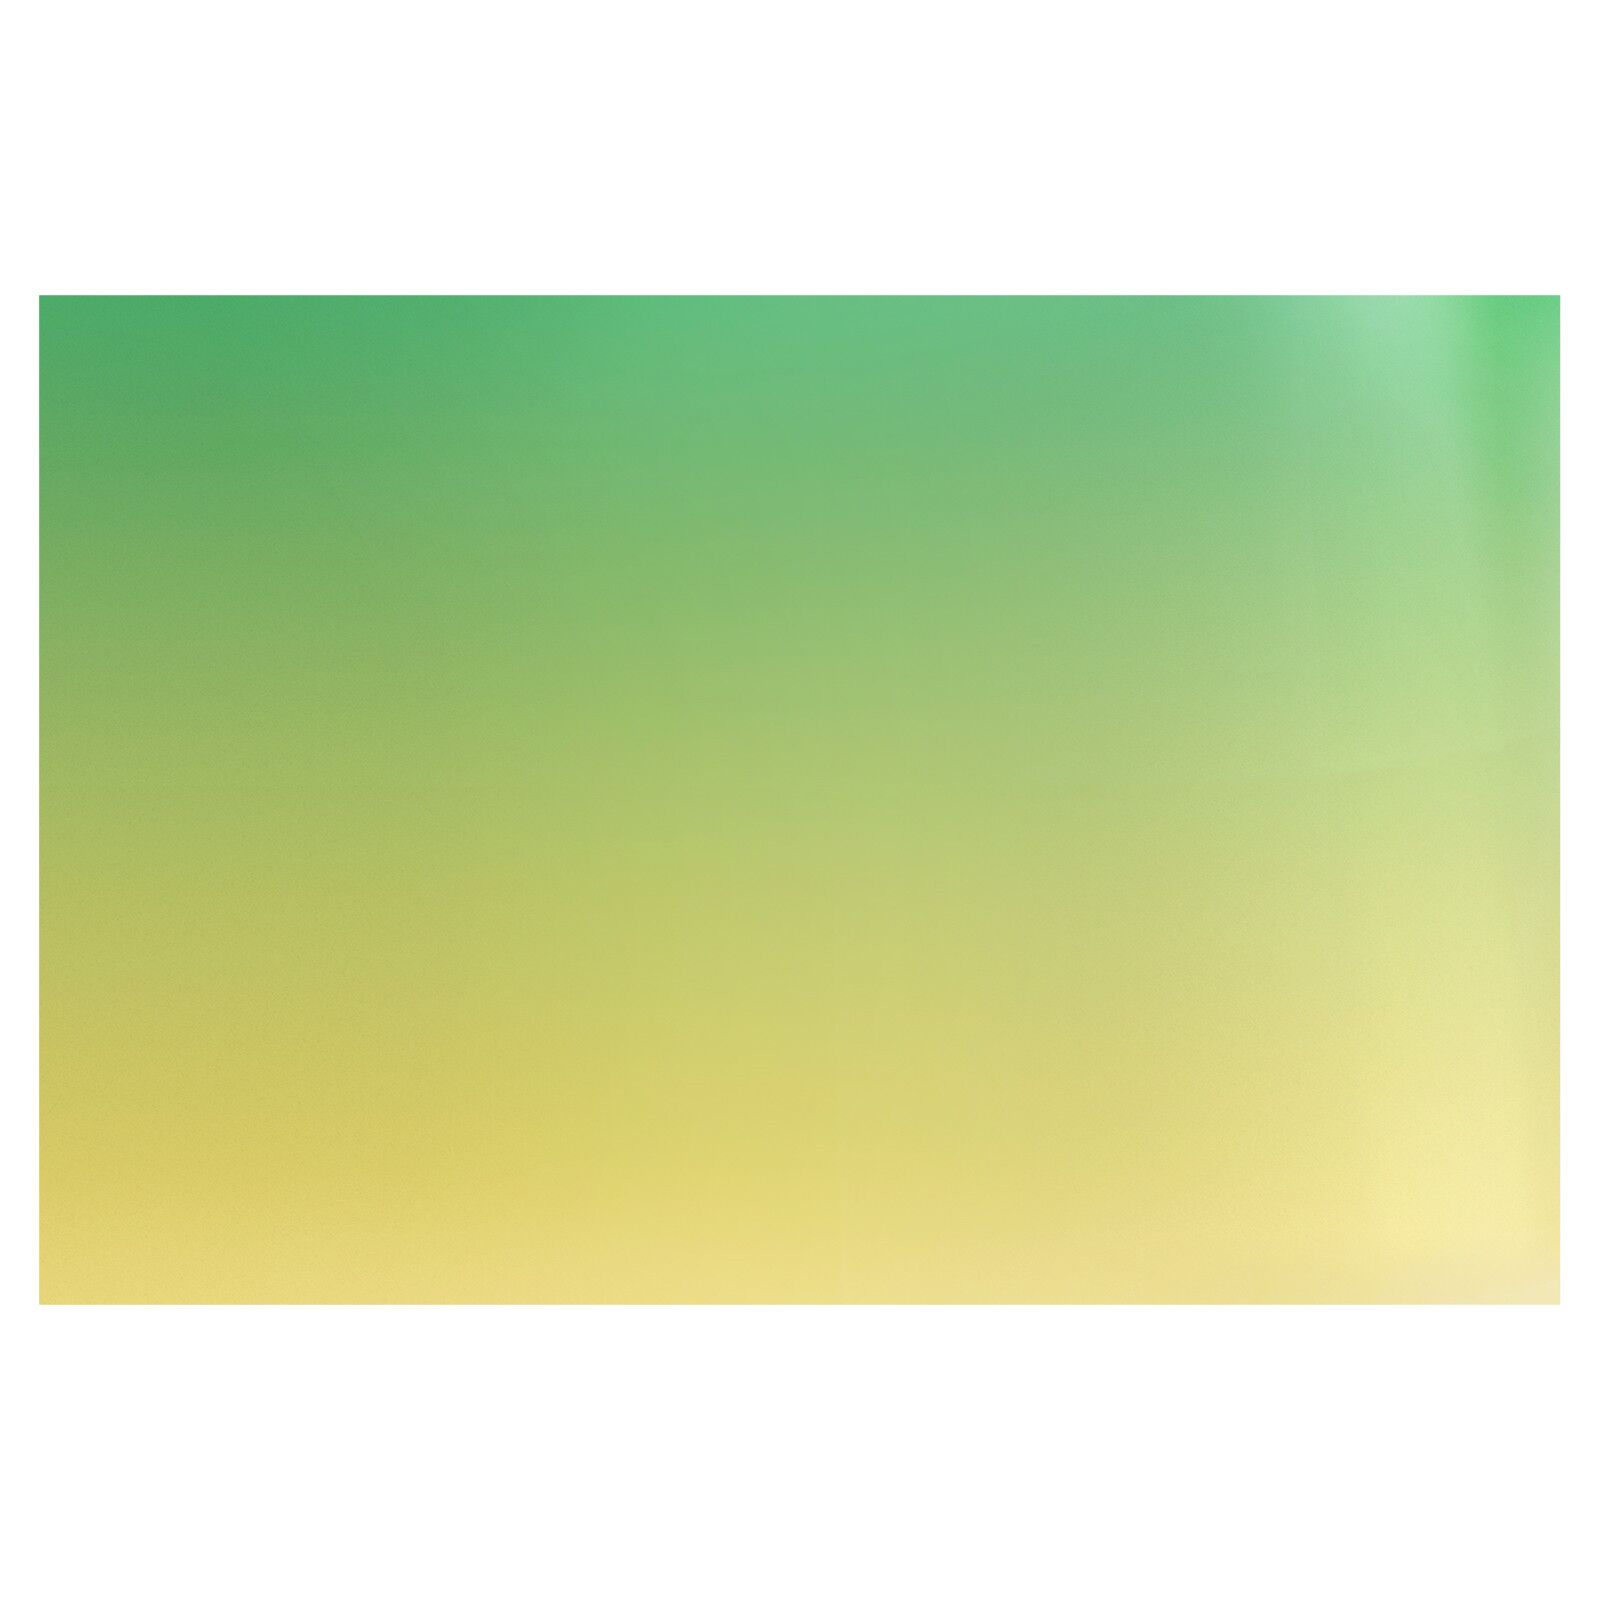 Lightground - Gradient Foil Green/Yellow | Aquasabi - Aquascaping